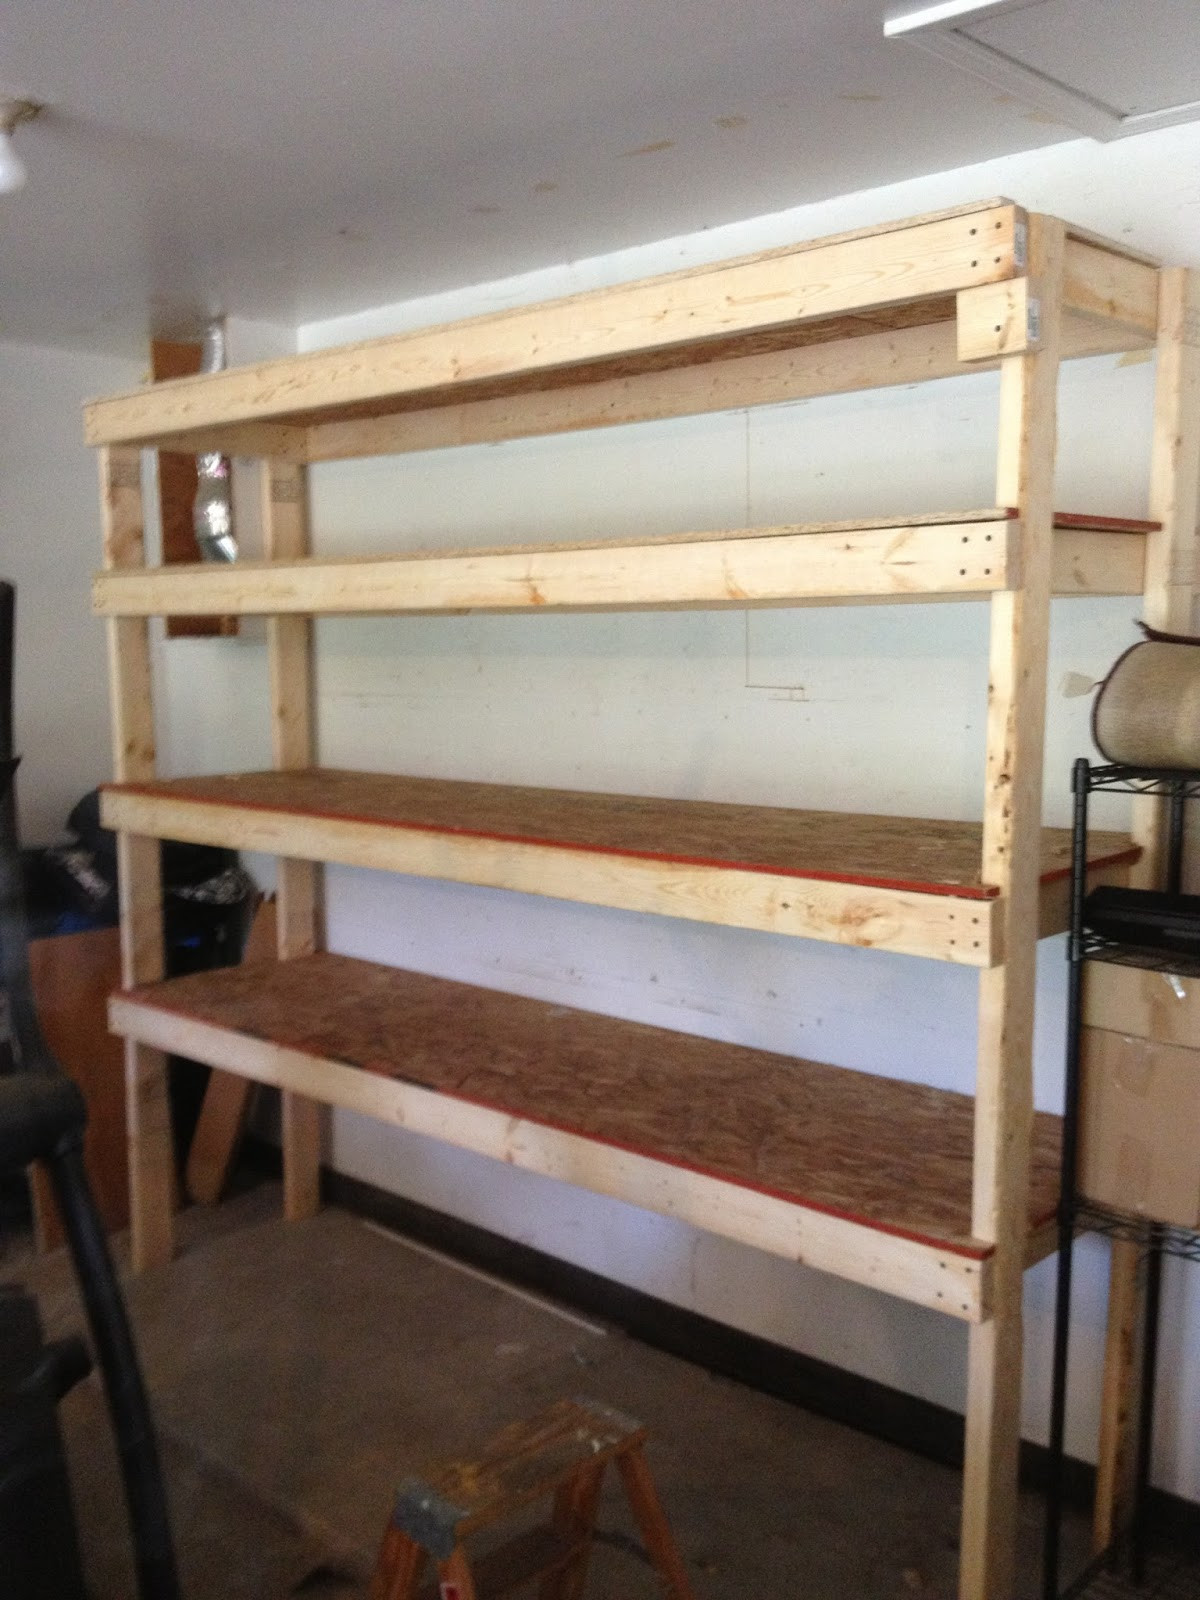 Best ideas about Garage Storage Shelf Diy
. Save or Pin 20 DIY Garage Shelving Ideas Now.